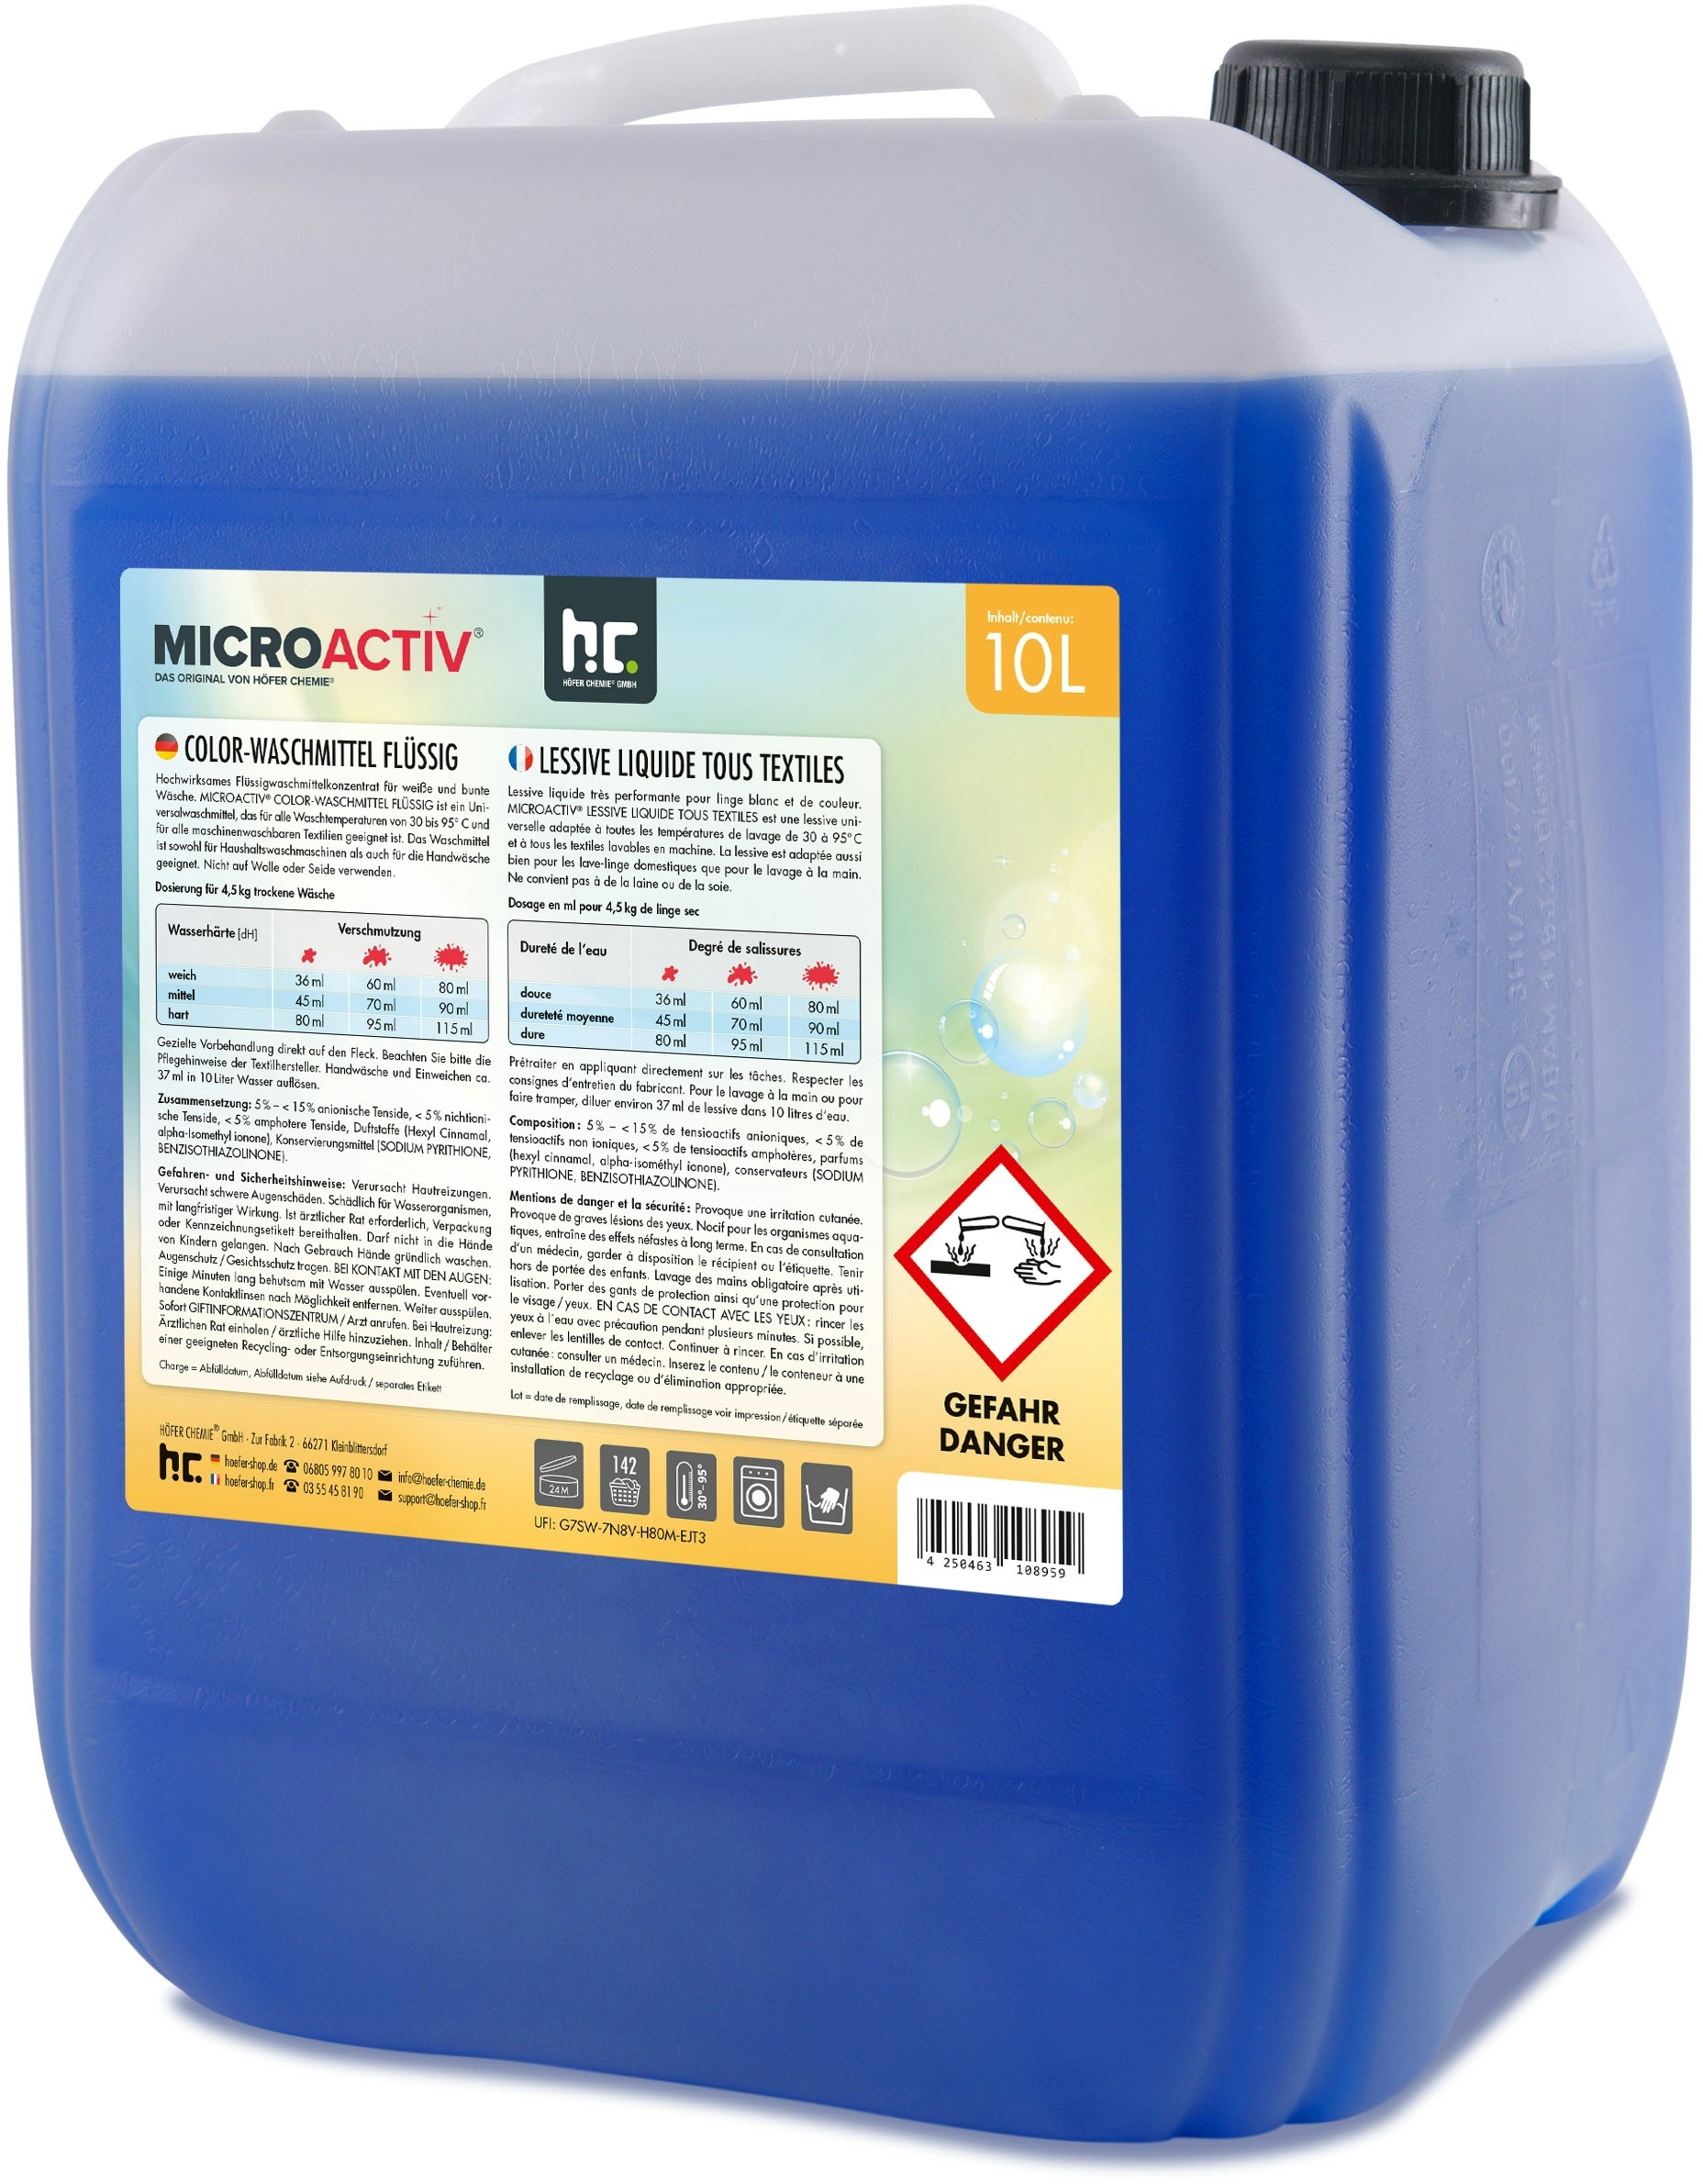 1 x 10 Liter Microactiv® Color Waschmittel flüssig